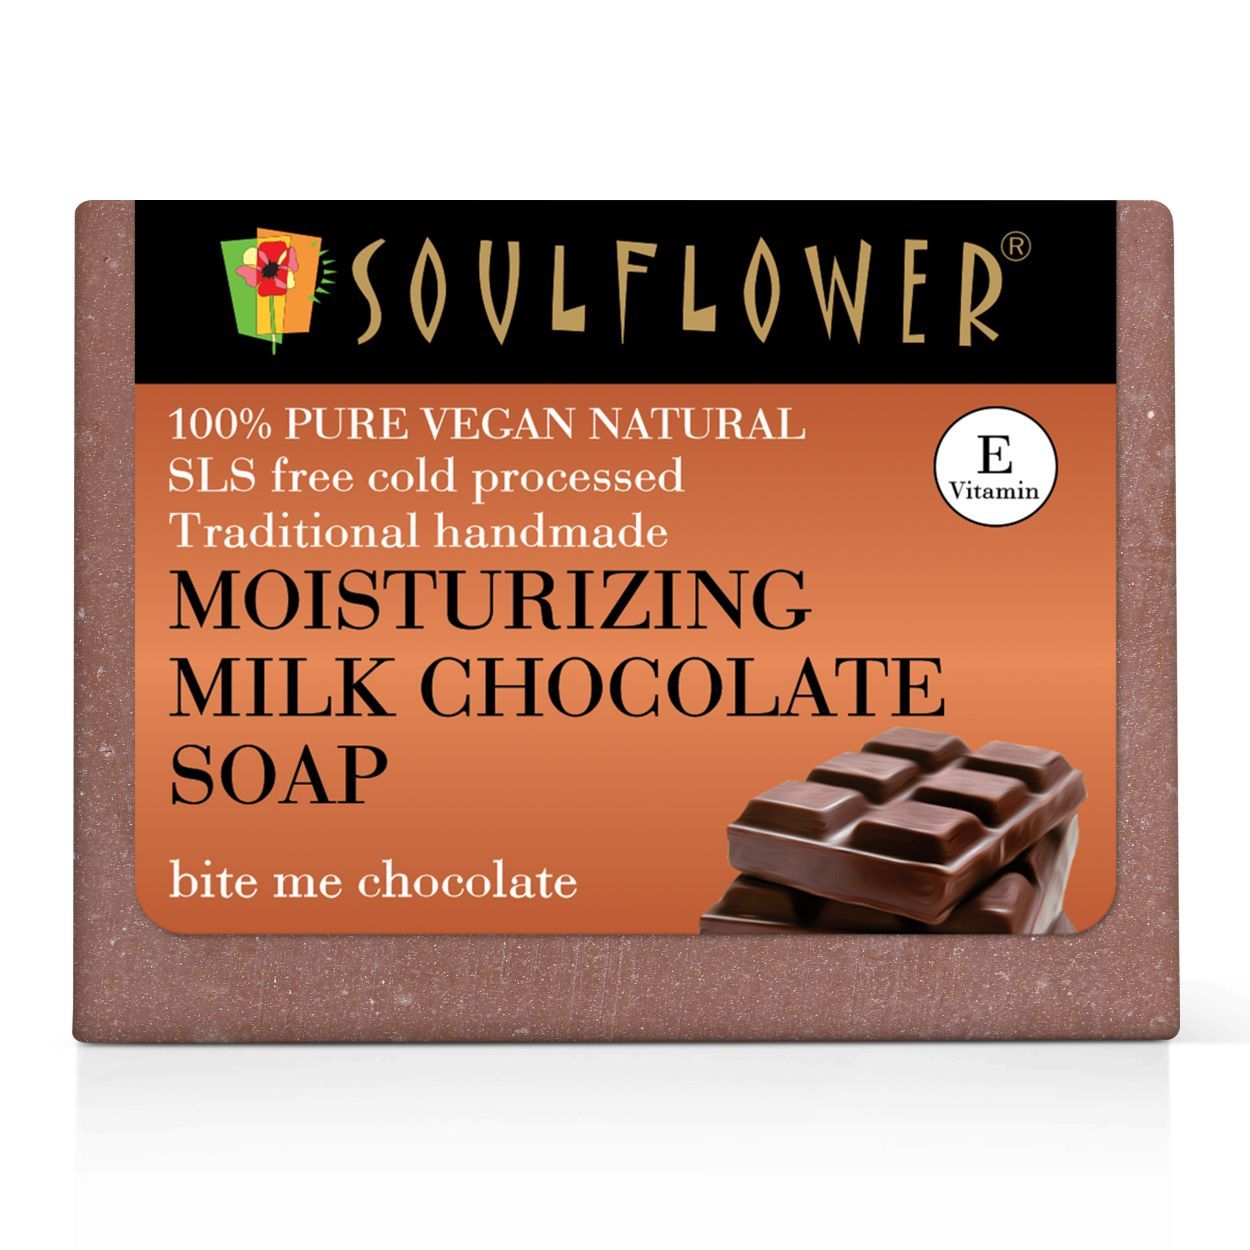 Soulflower Organic Handmade Coco Butter & Milk Chocolate Bathing Bar Soap For Winter Moisturizer